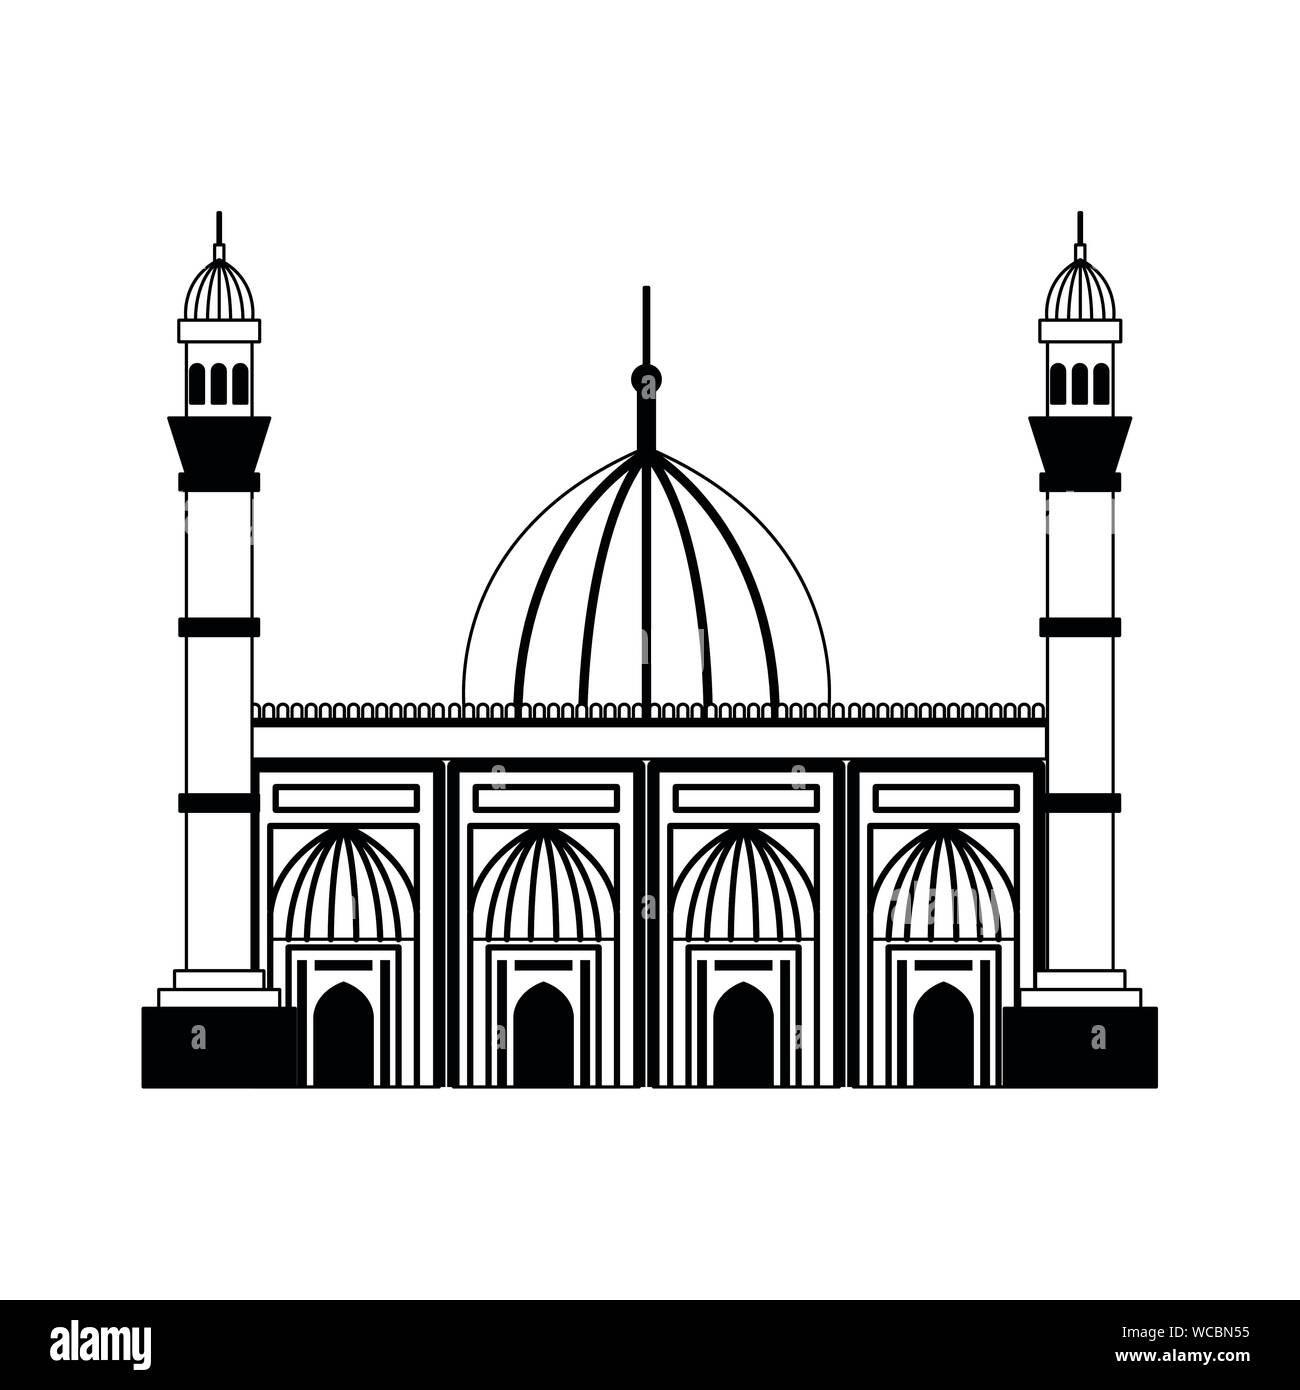 badshahi mosque building palace icon Stock Vector